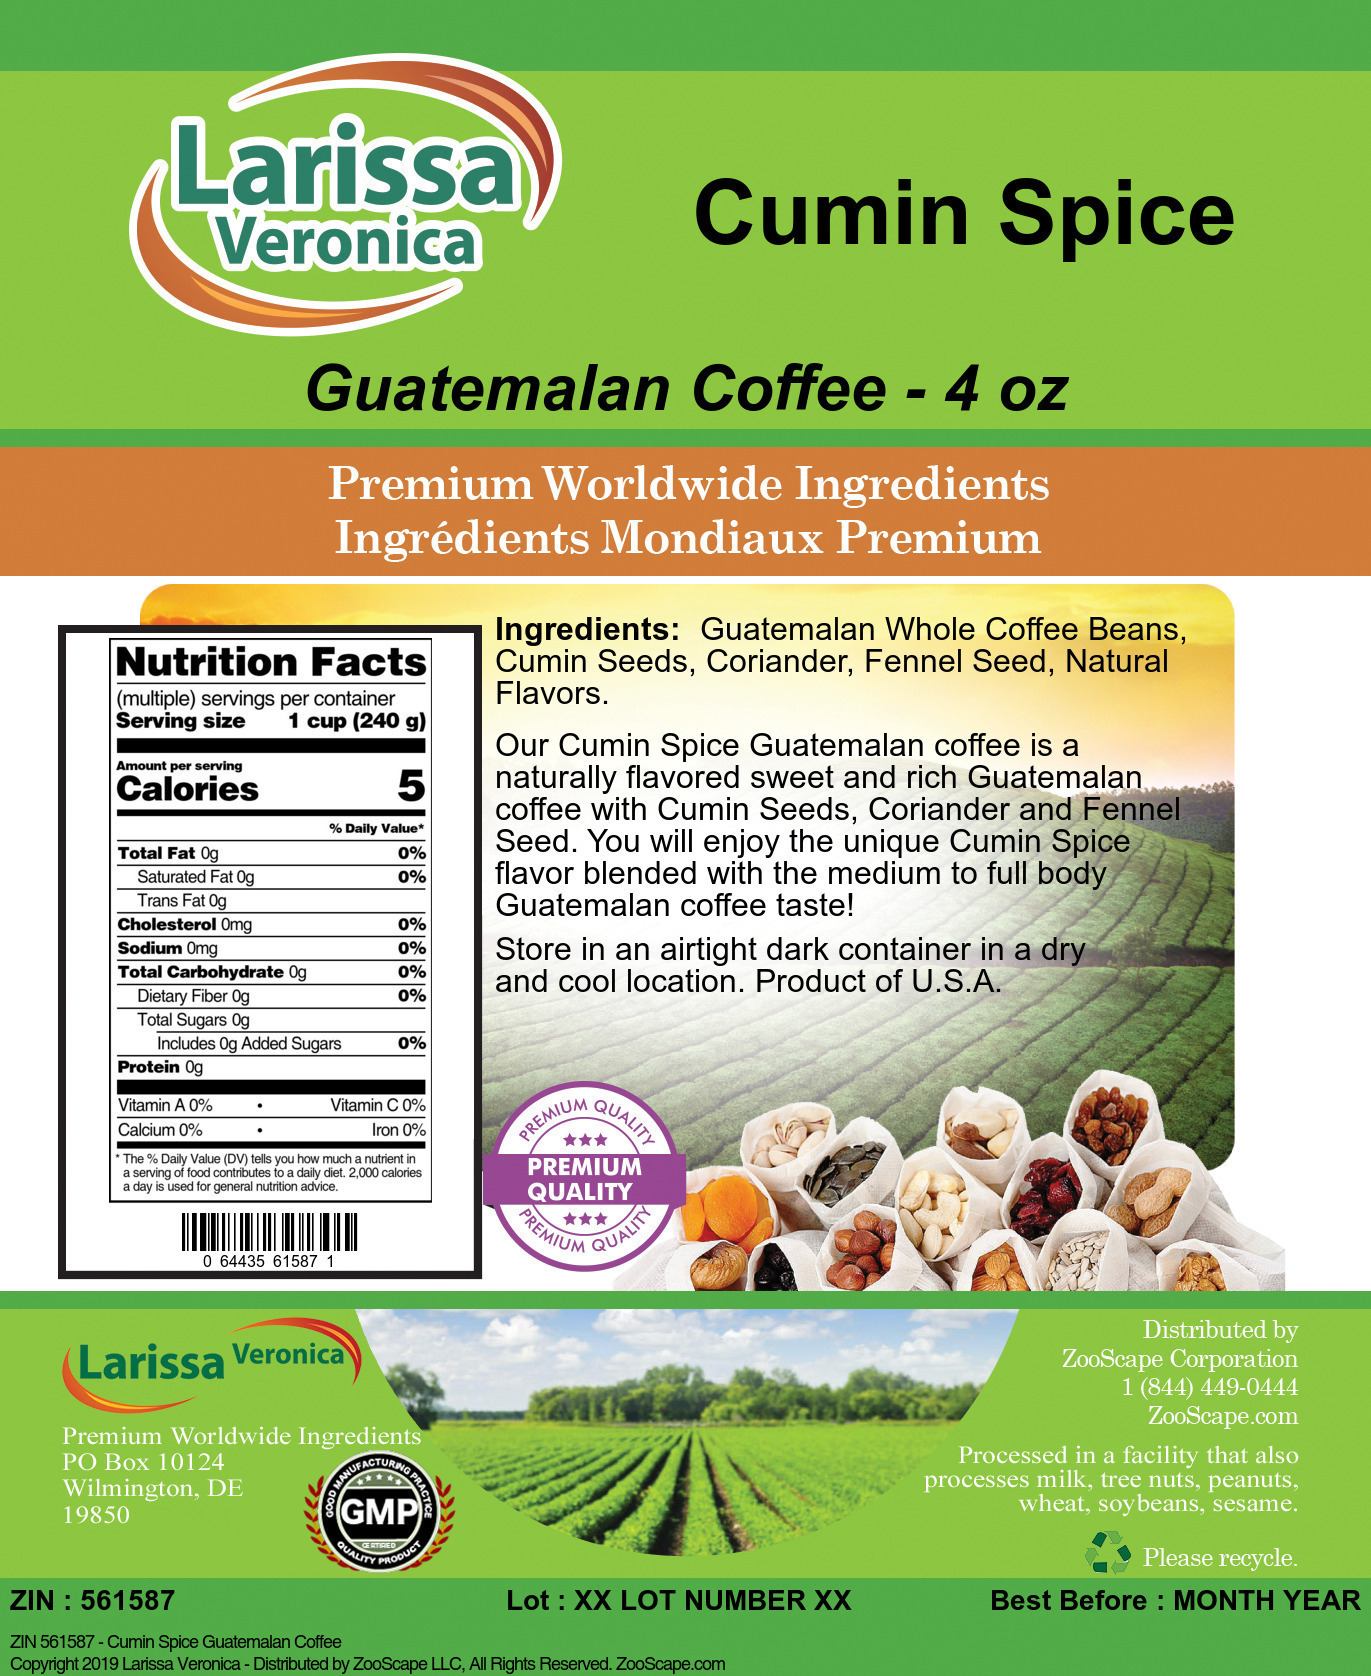 Cumin Spice Guatemalan Coffee - Label